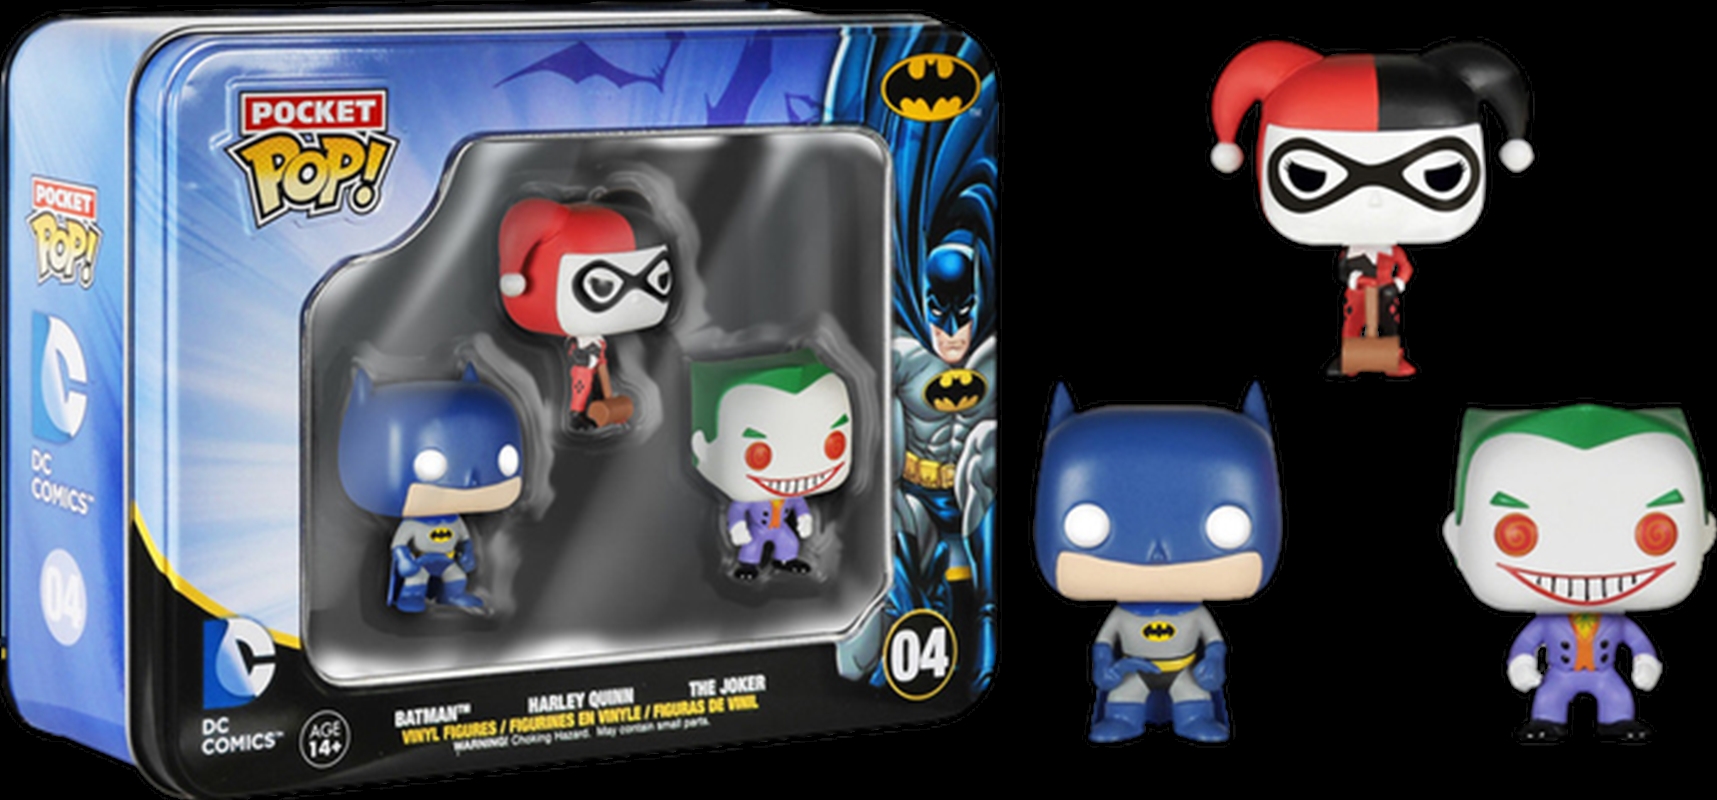 Batman - Batman, Harley Quinn and Joker Pocket Pop! 3-Pack Tin/Product Detail/Movies